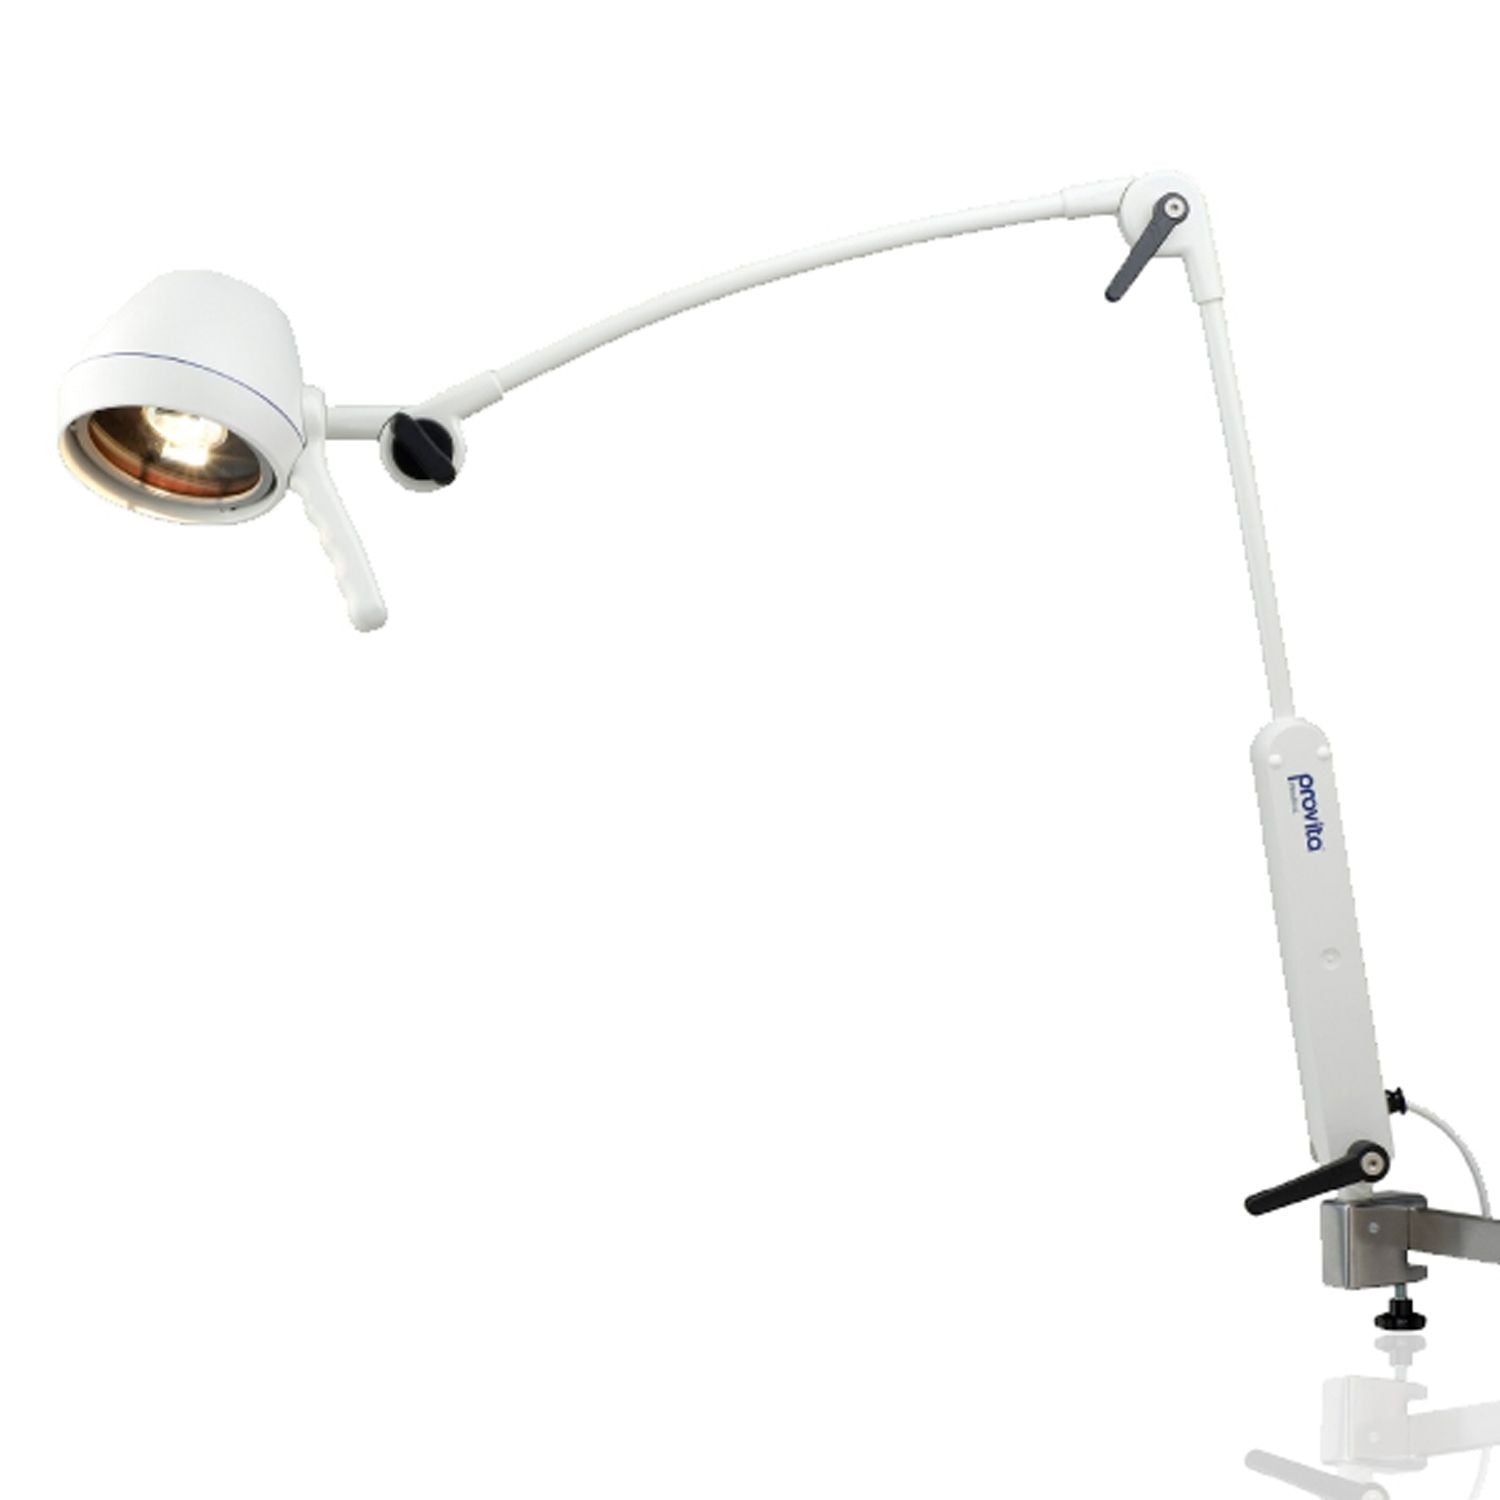 Provita 50w Examination Lamp On Double Joint Arm